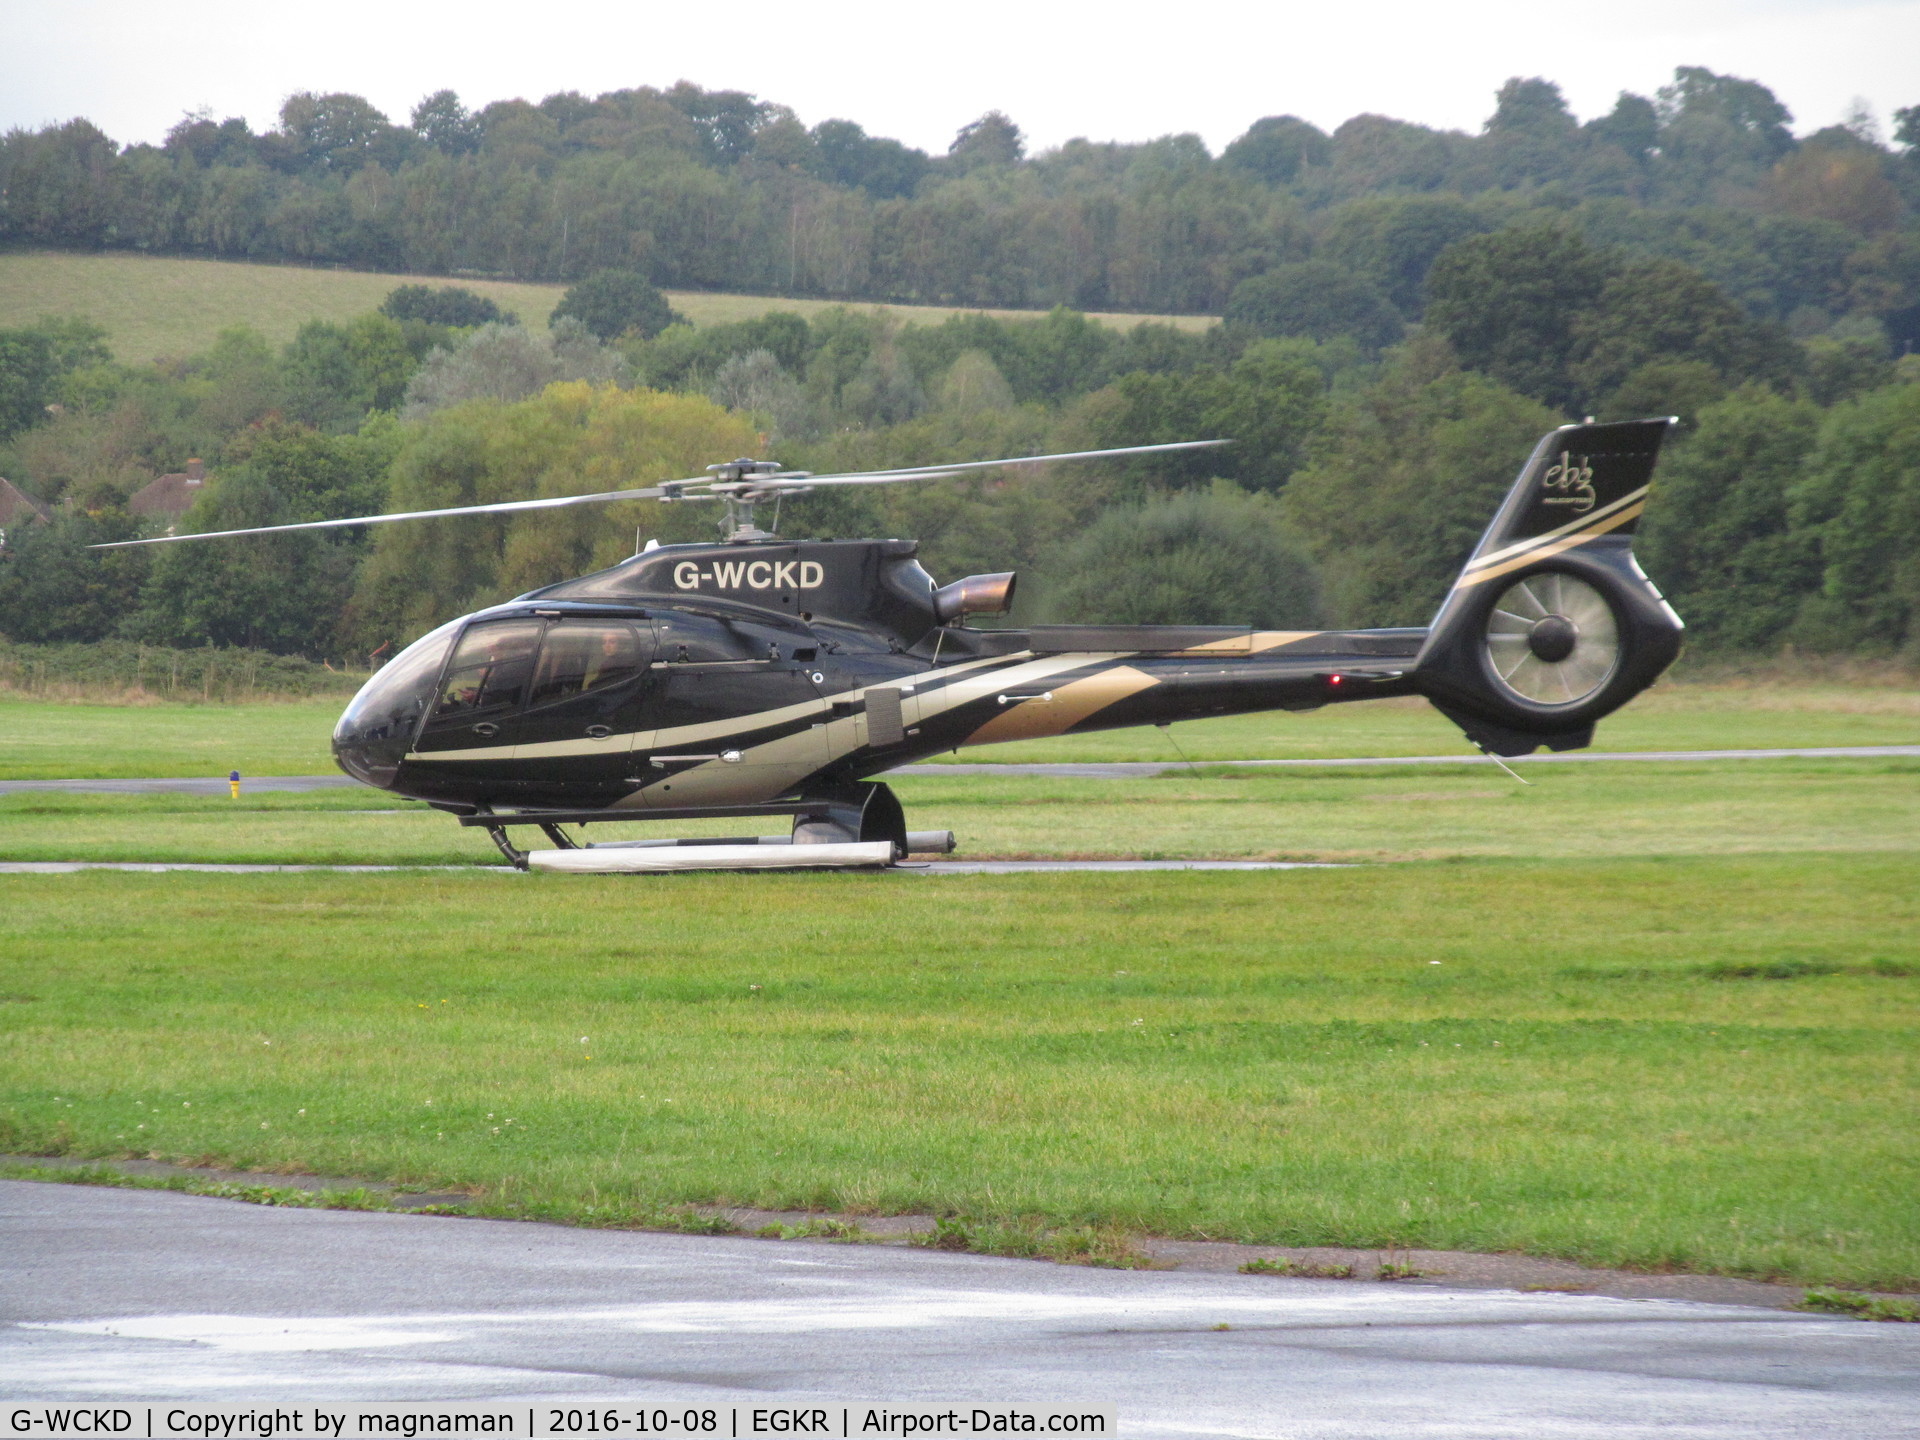 G-WCKD, 2009 Eurocopter EC-130B-4 (AS-350B-4) C/N 4746, just landed